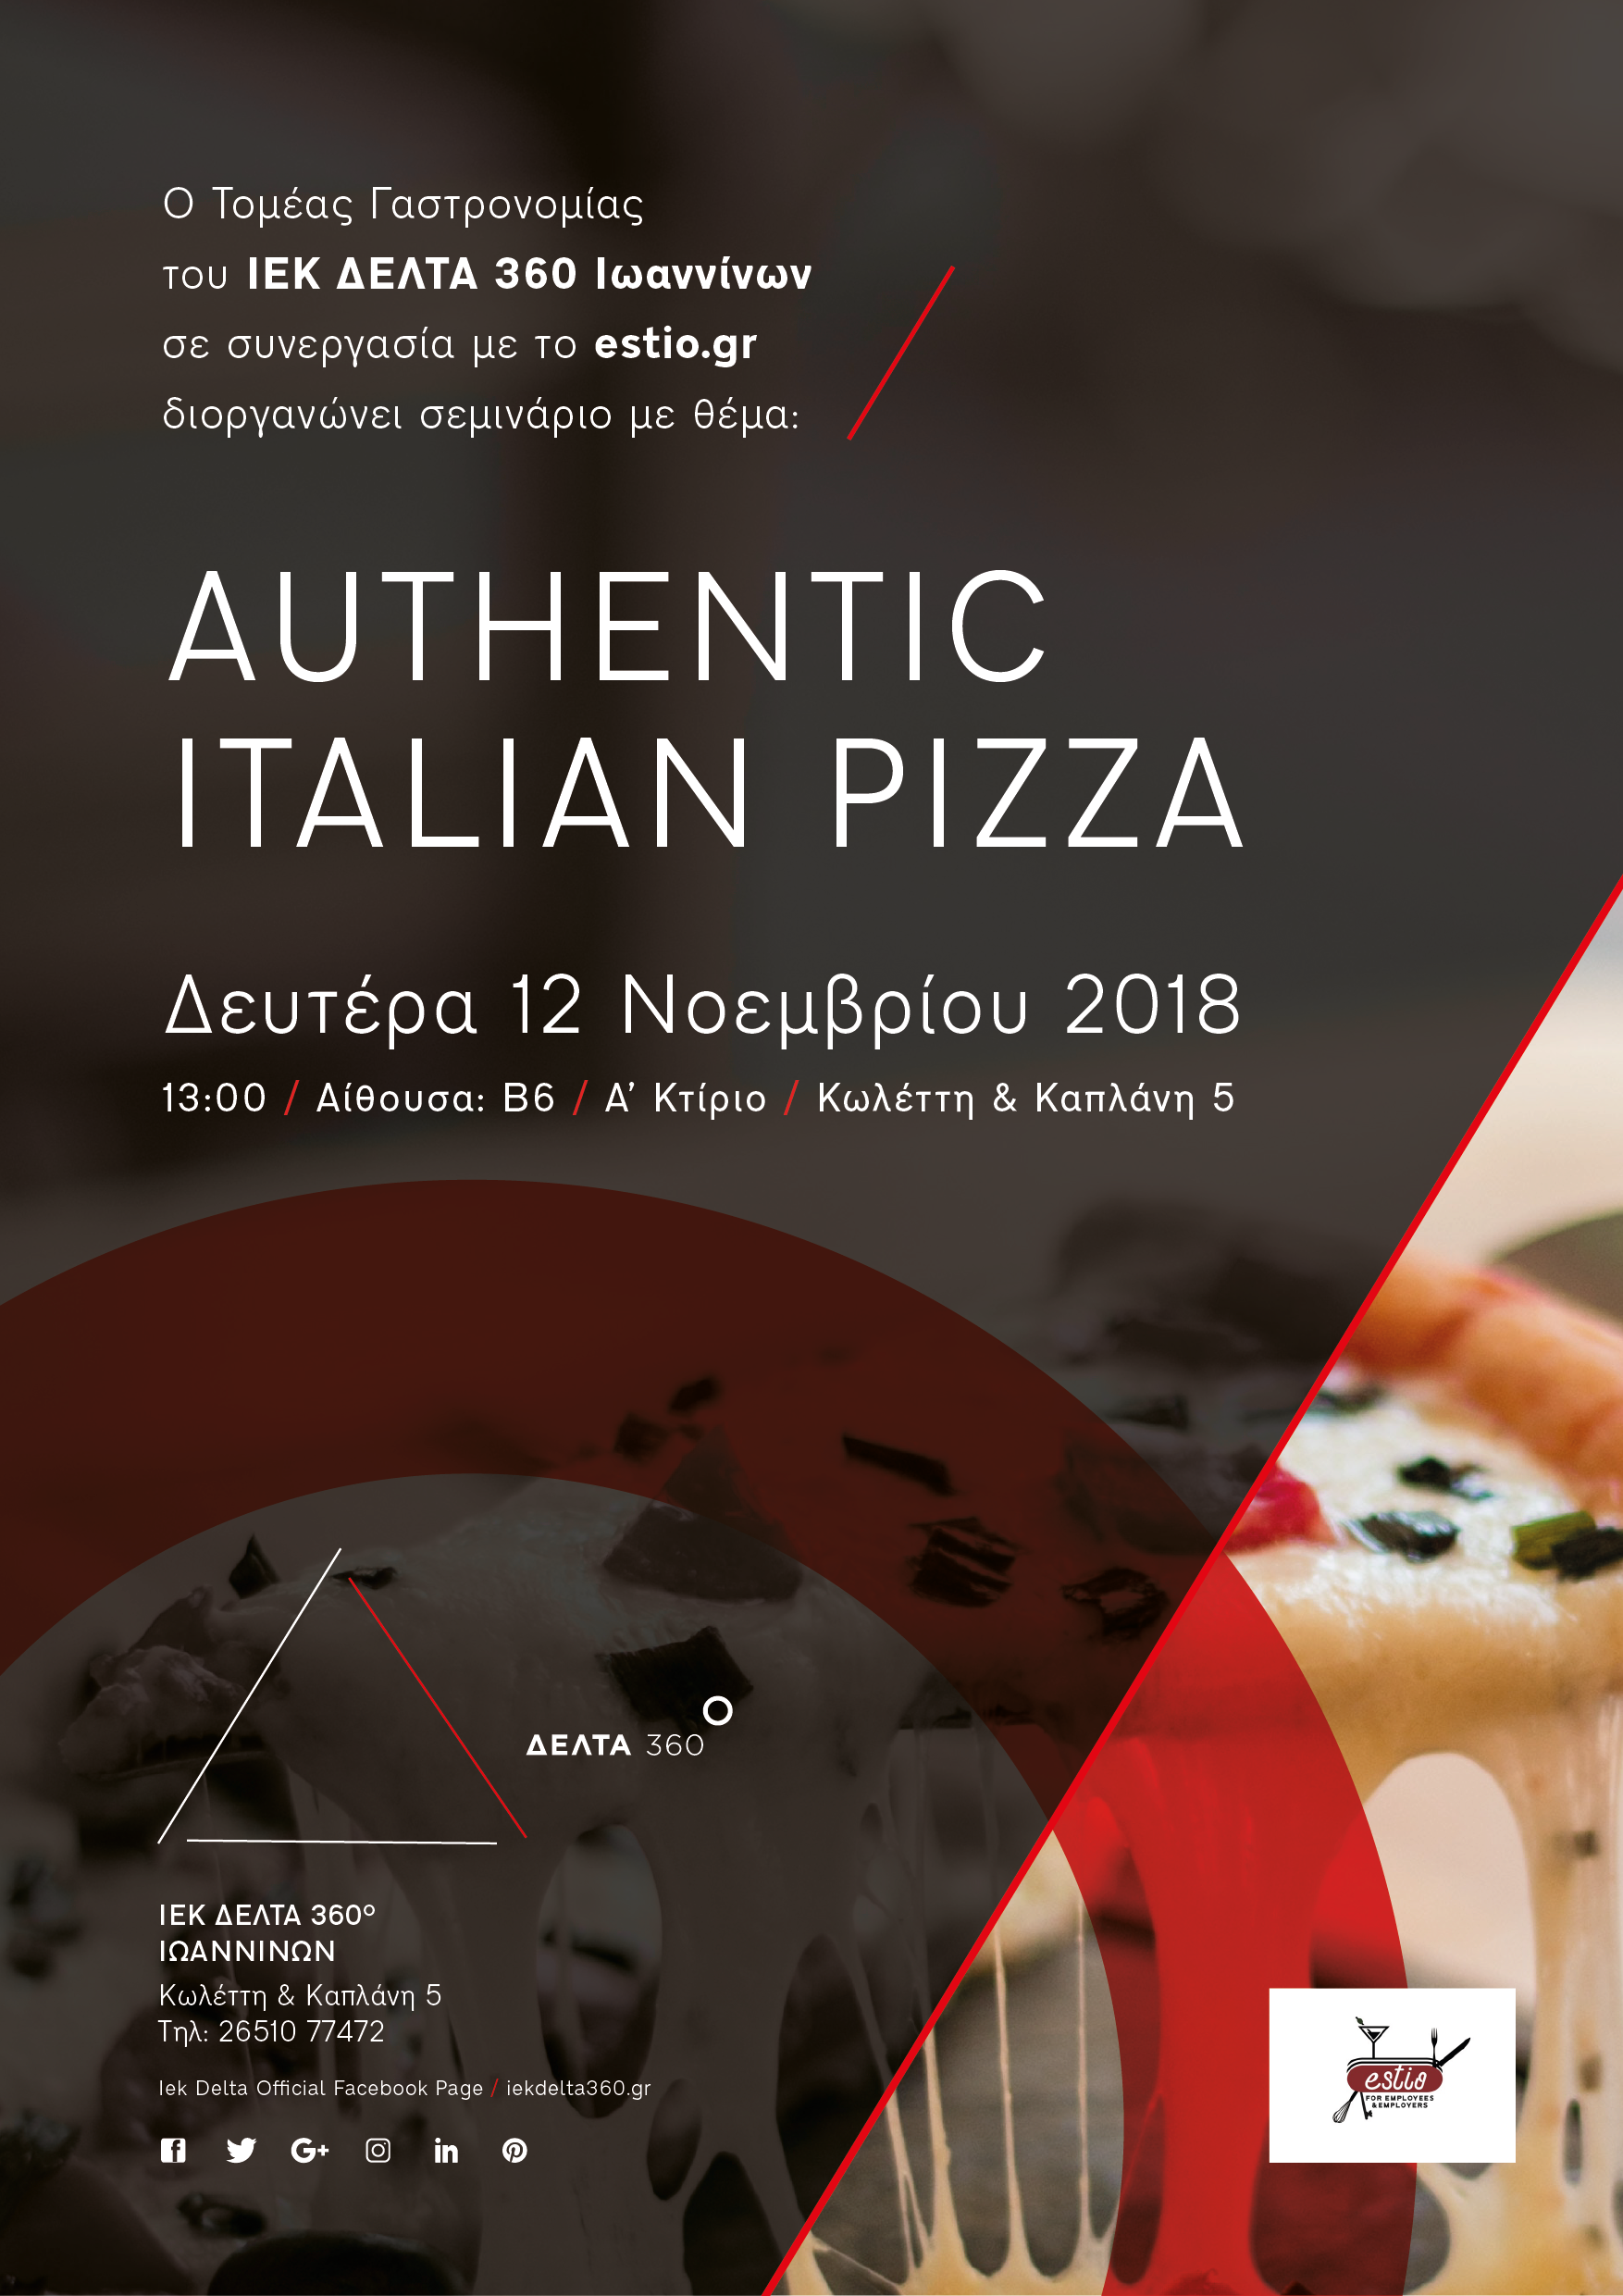 ioa-italian-pizza-01.png